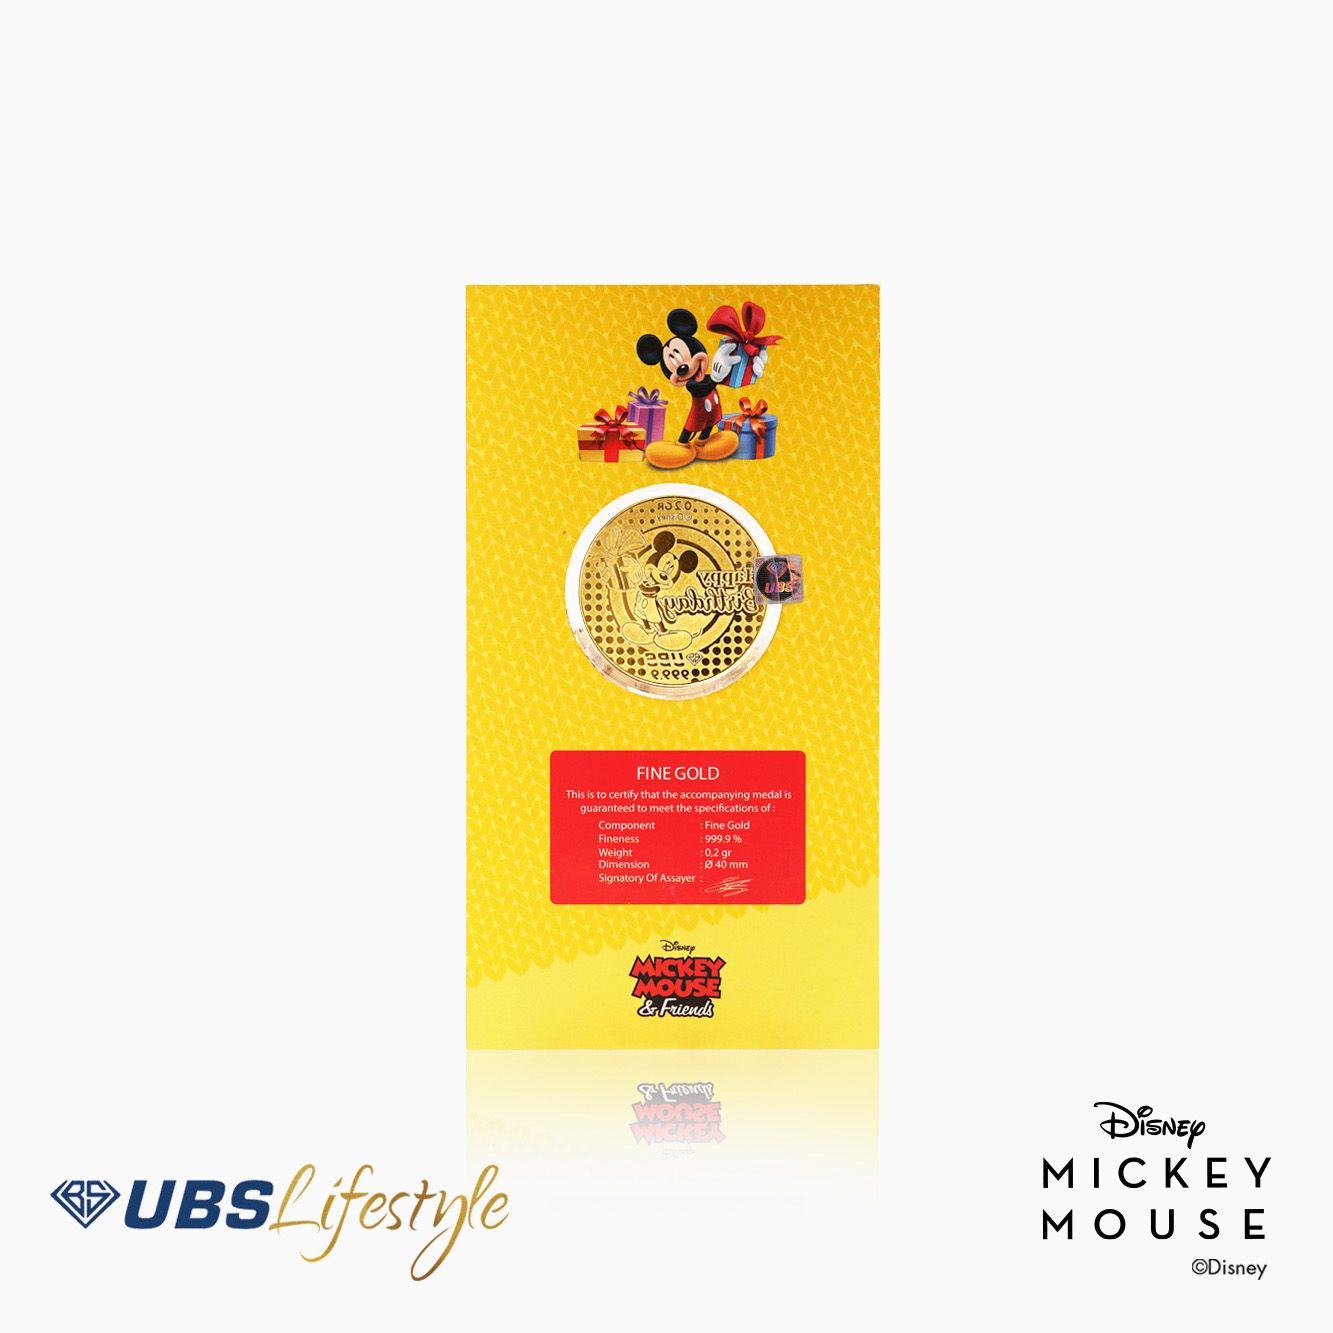 UBS Angpao 24K Disney Mickey & Minnie Mouse Birthday Edition 0.2 Gram